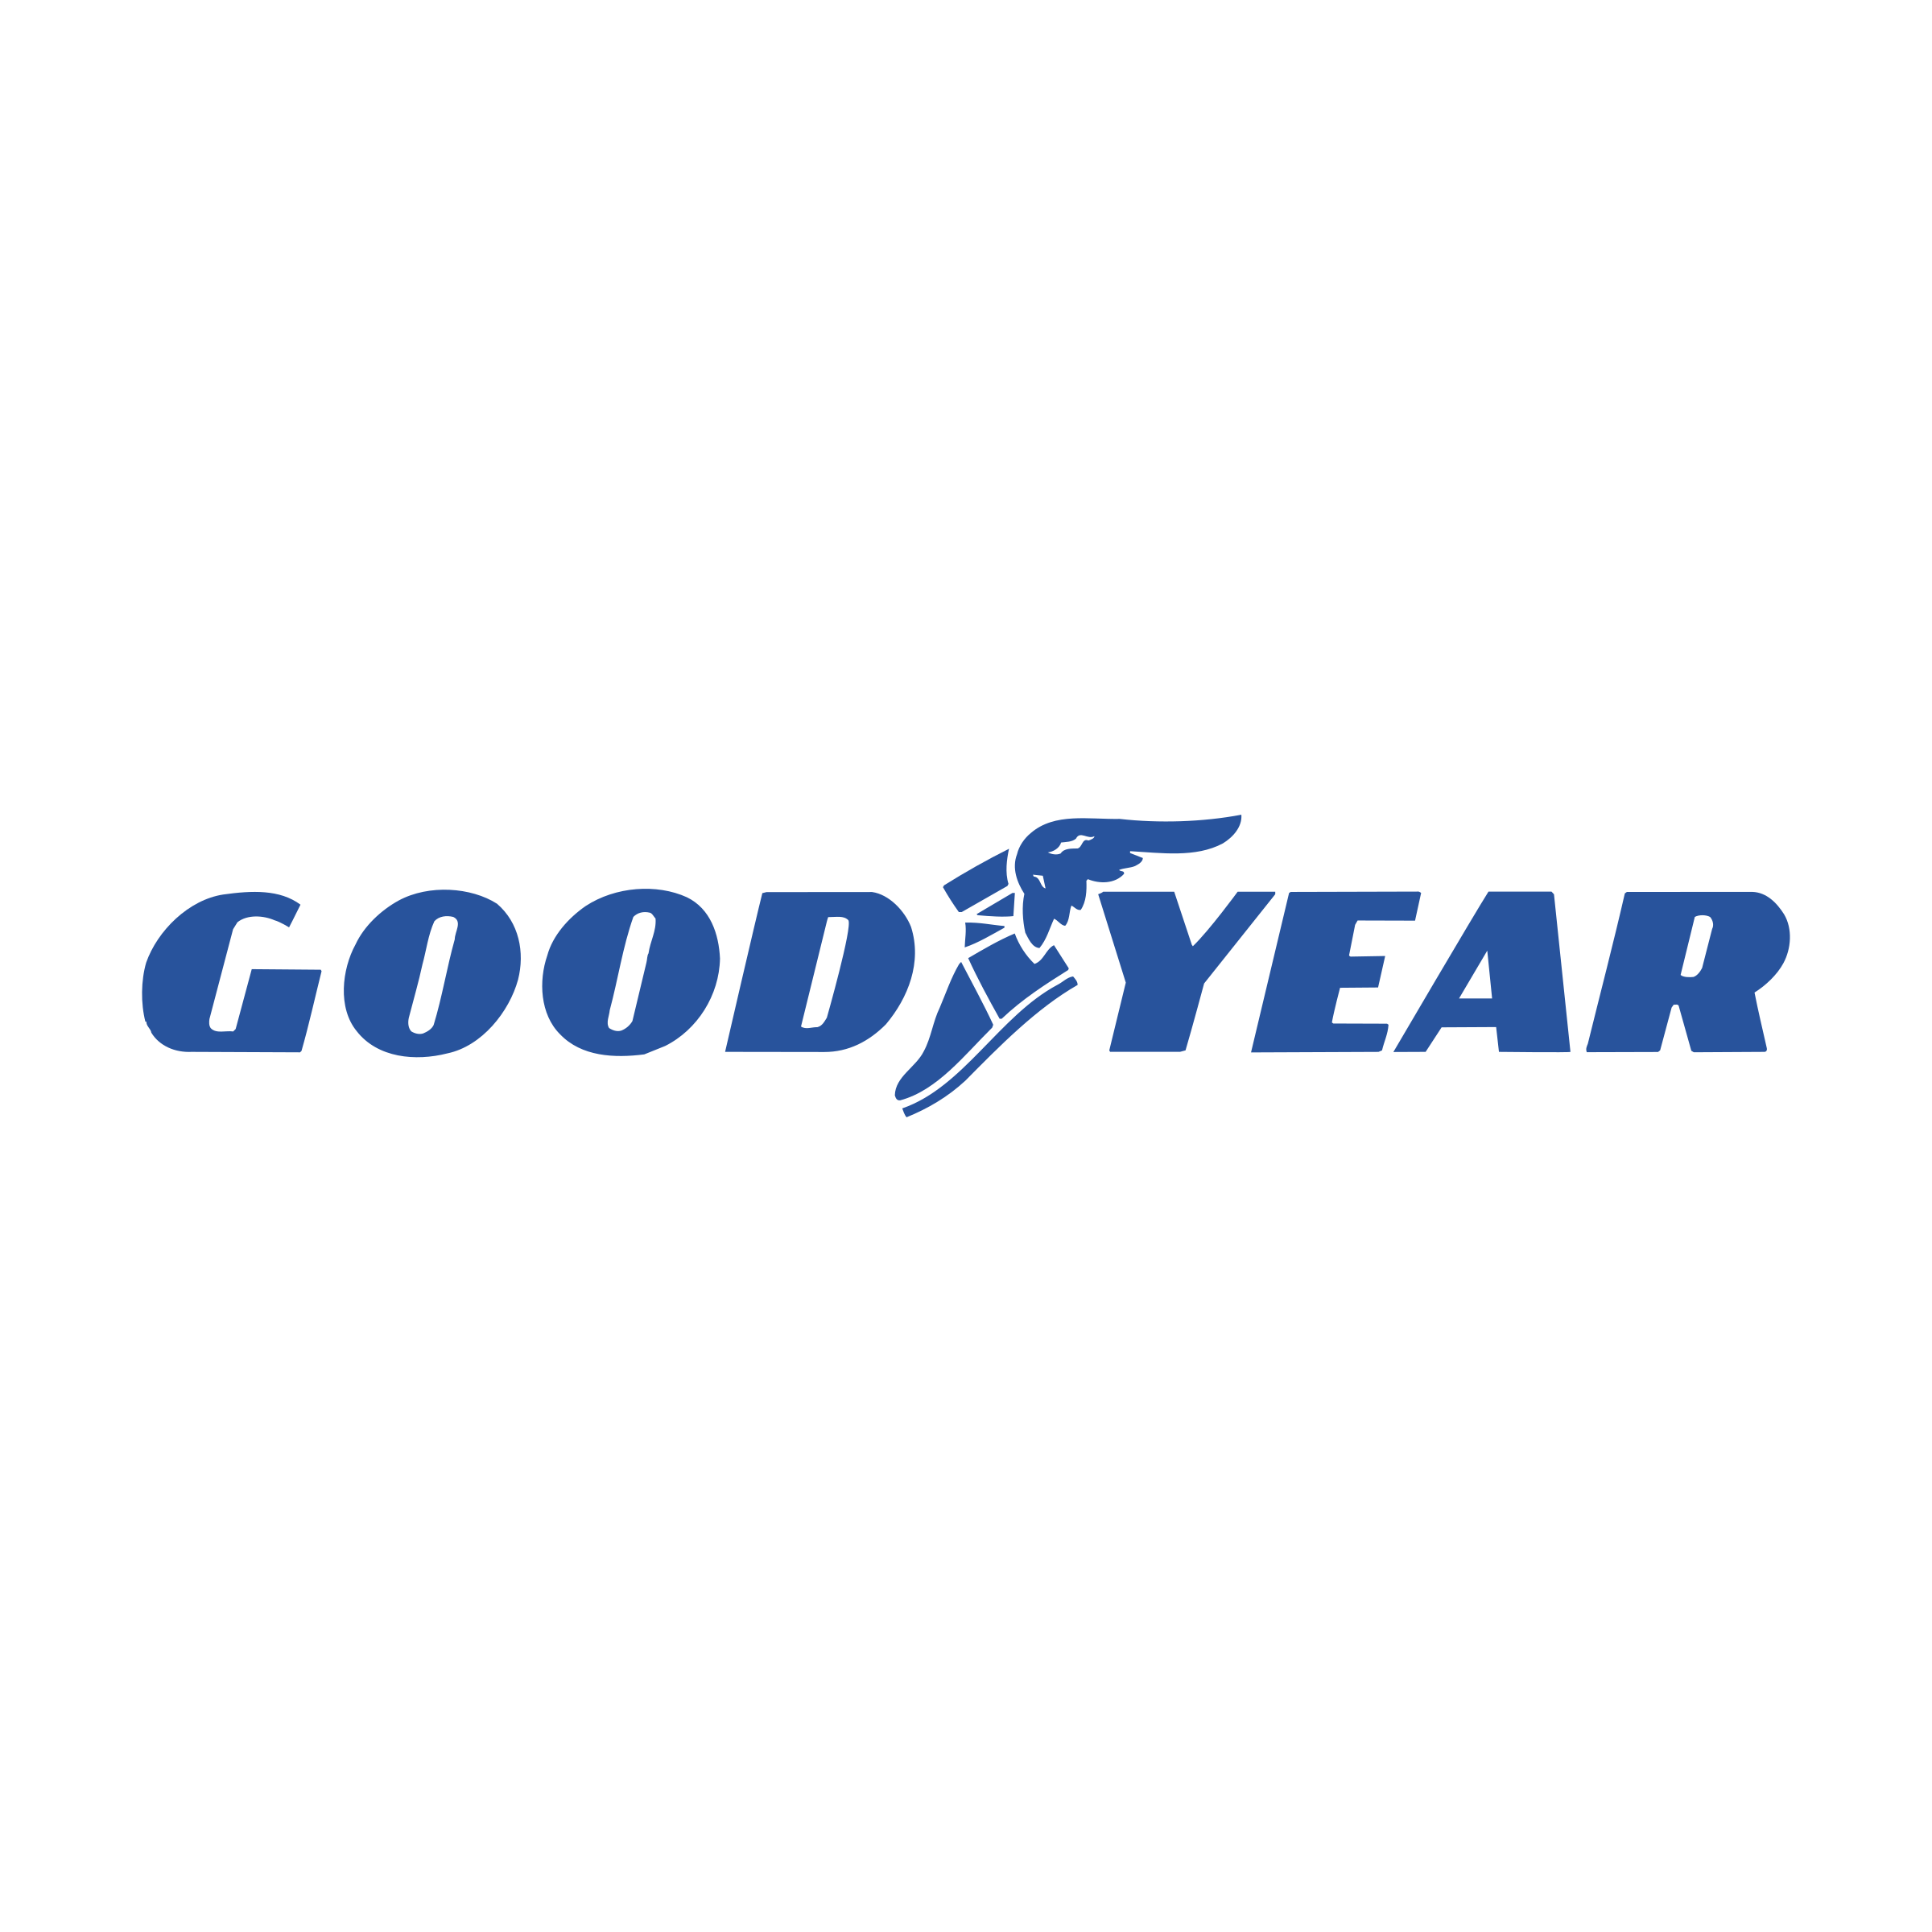 Goodyear Logo - Goodyear Logo PNG Transparent & SVG Vector